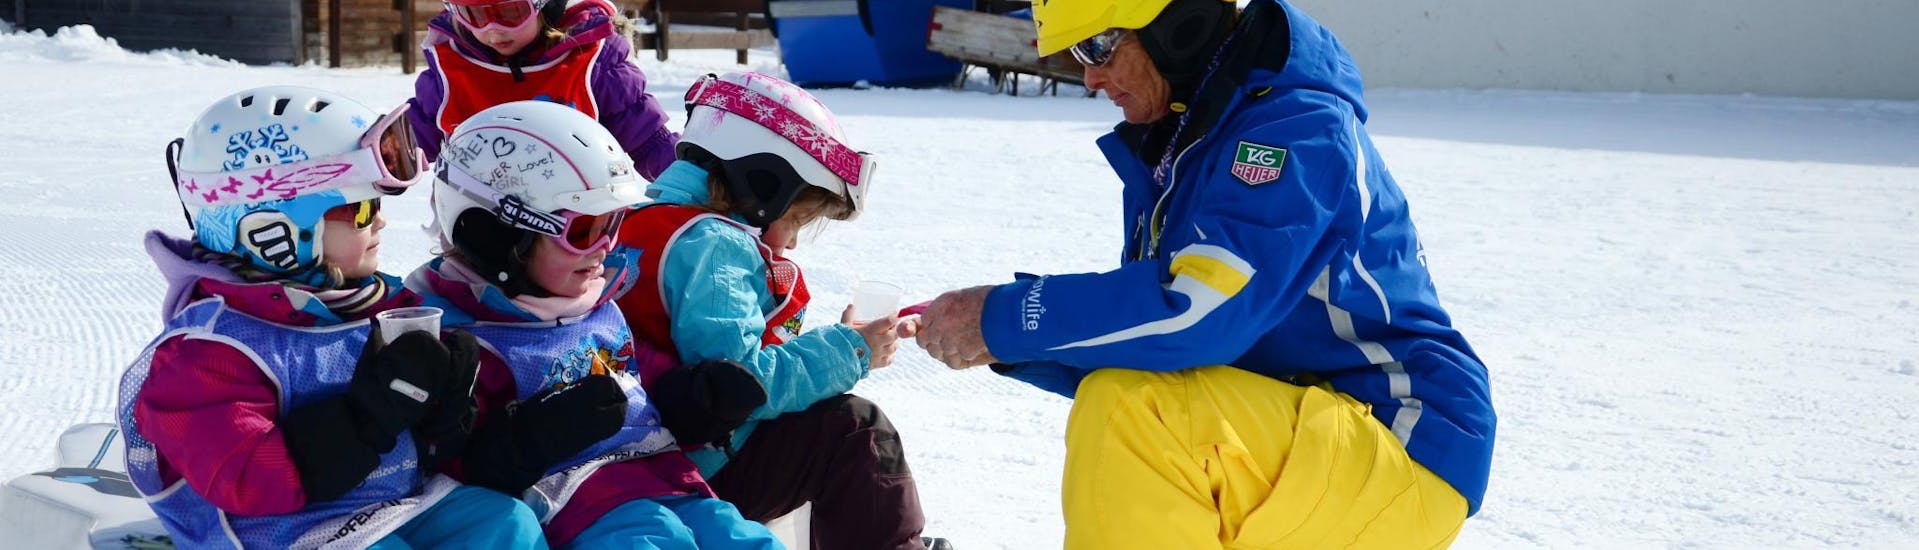 Kids Ski Lessons "Bolgen" (4-7 y.) for First Timers.